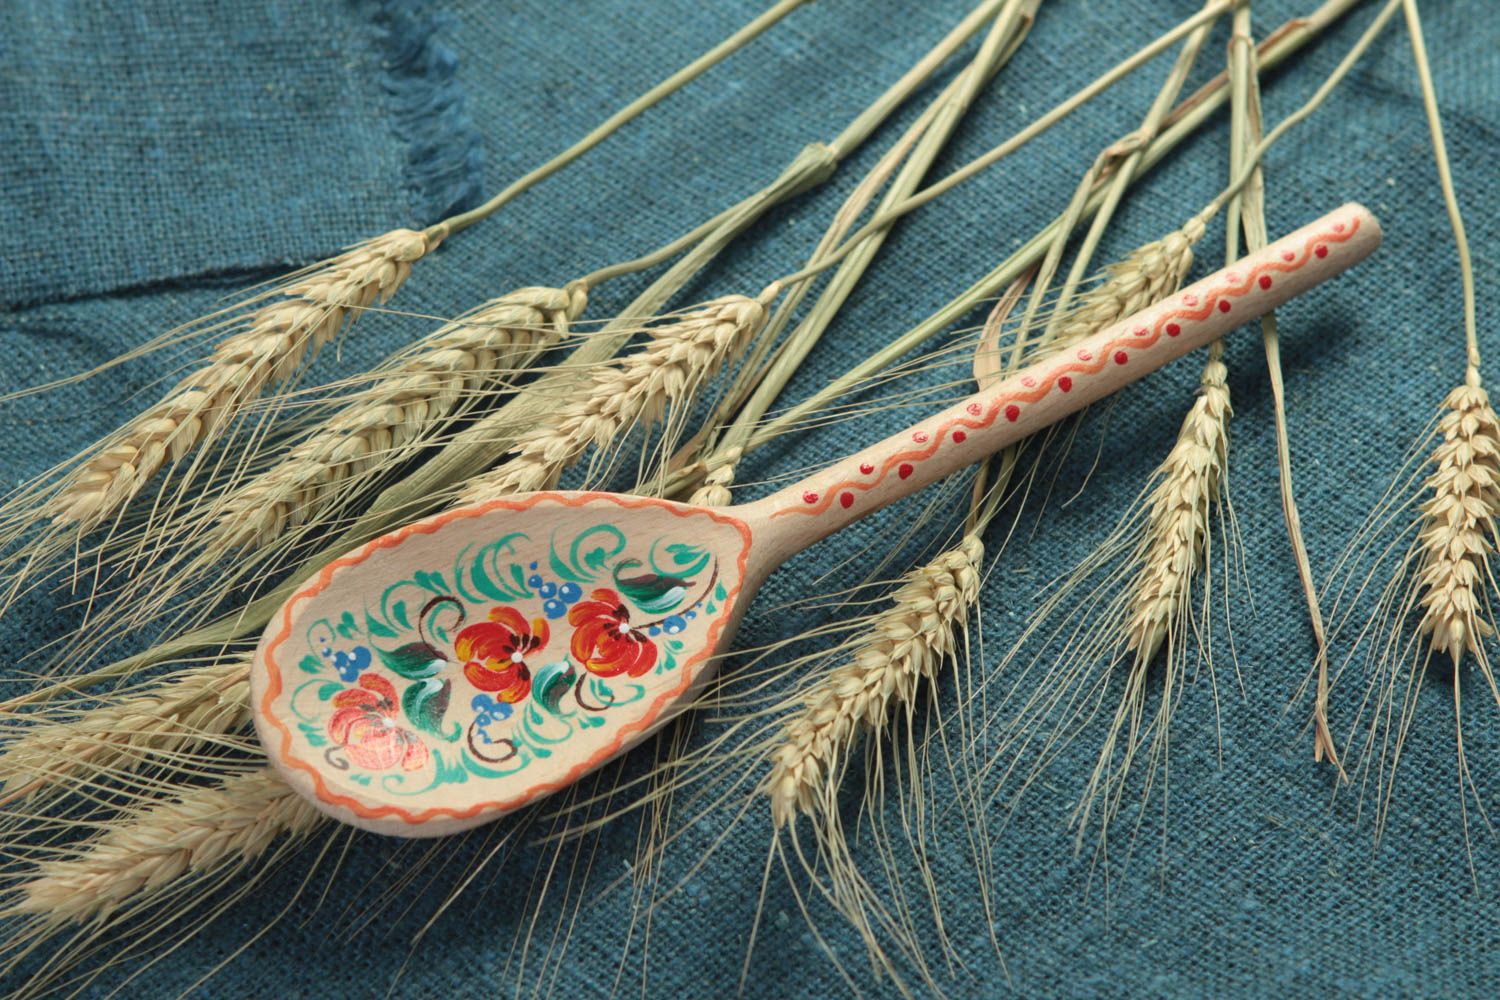 Handmade spoon wooden cutlery unusual gift decor ideas kitchen accessories photo 1